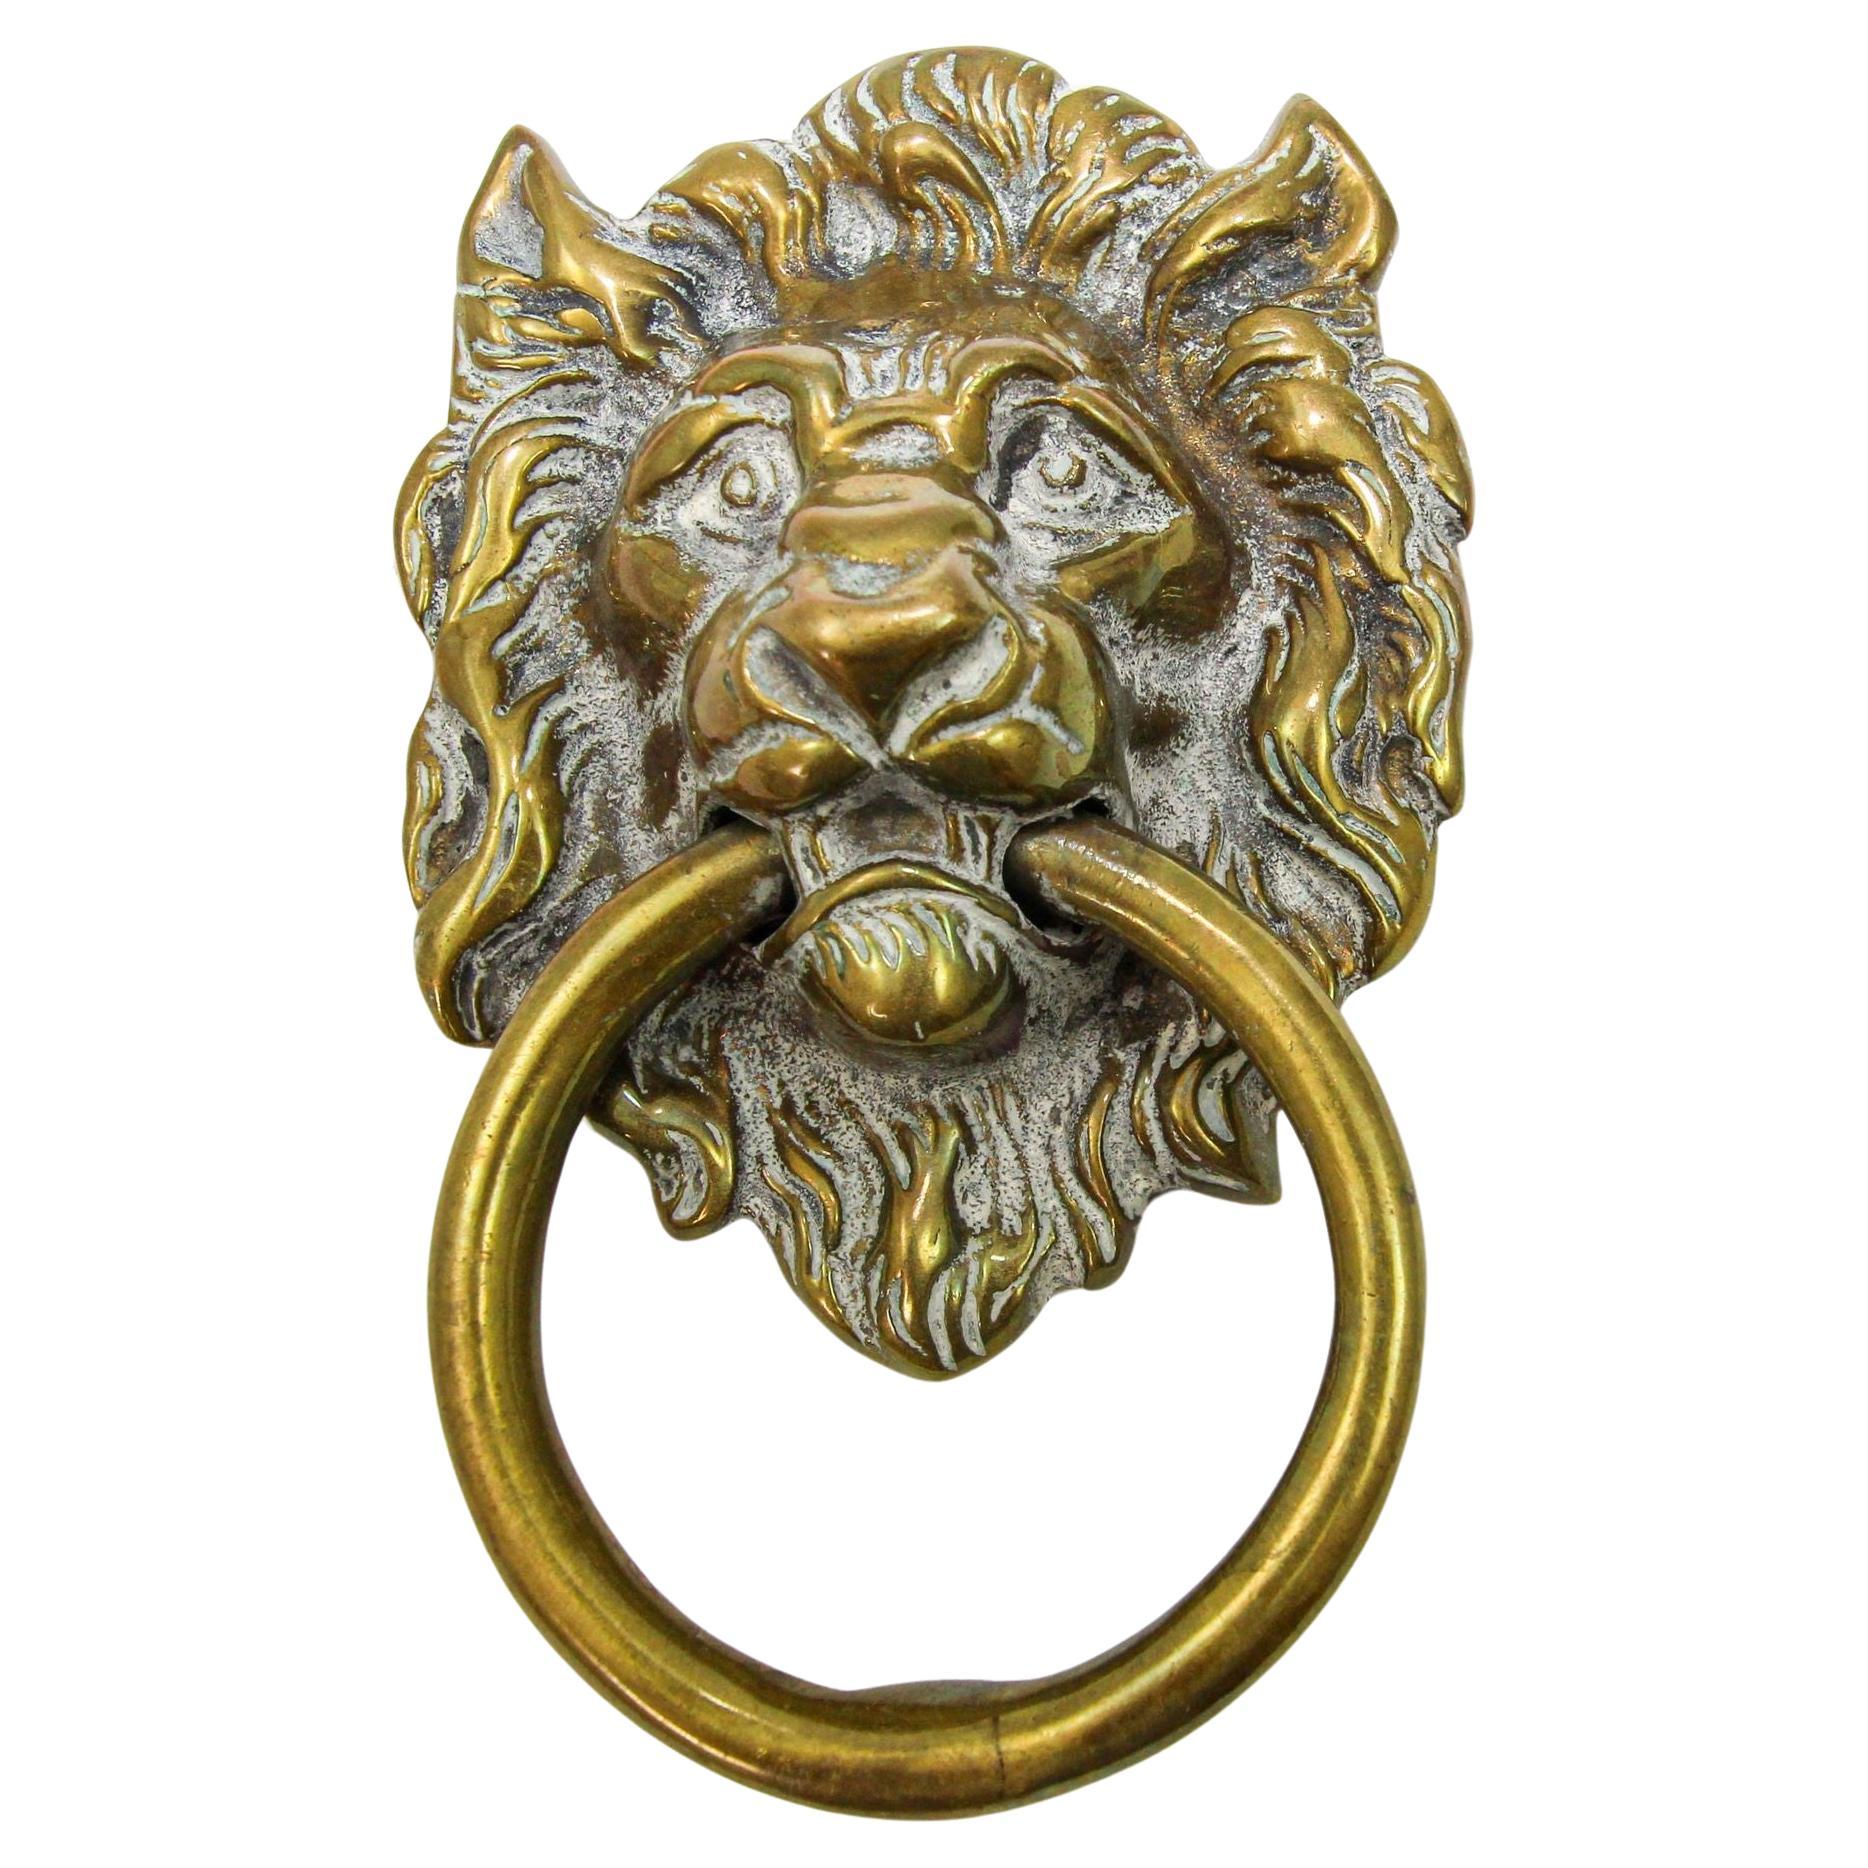 Vintage Patinated Solid Cast Brass Lion's Head Door Knocker